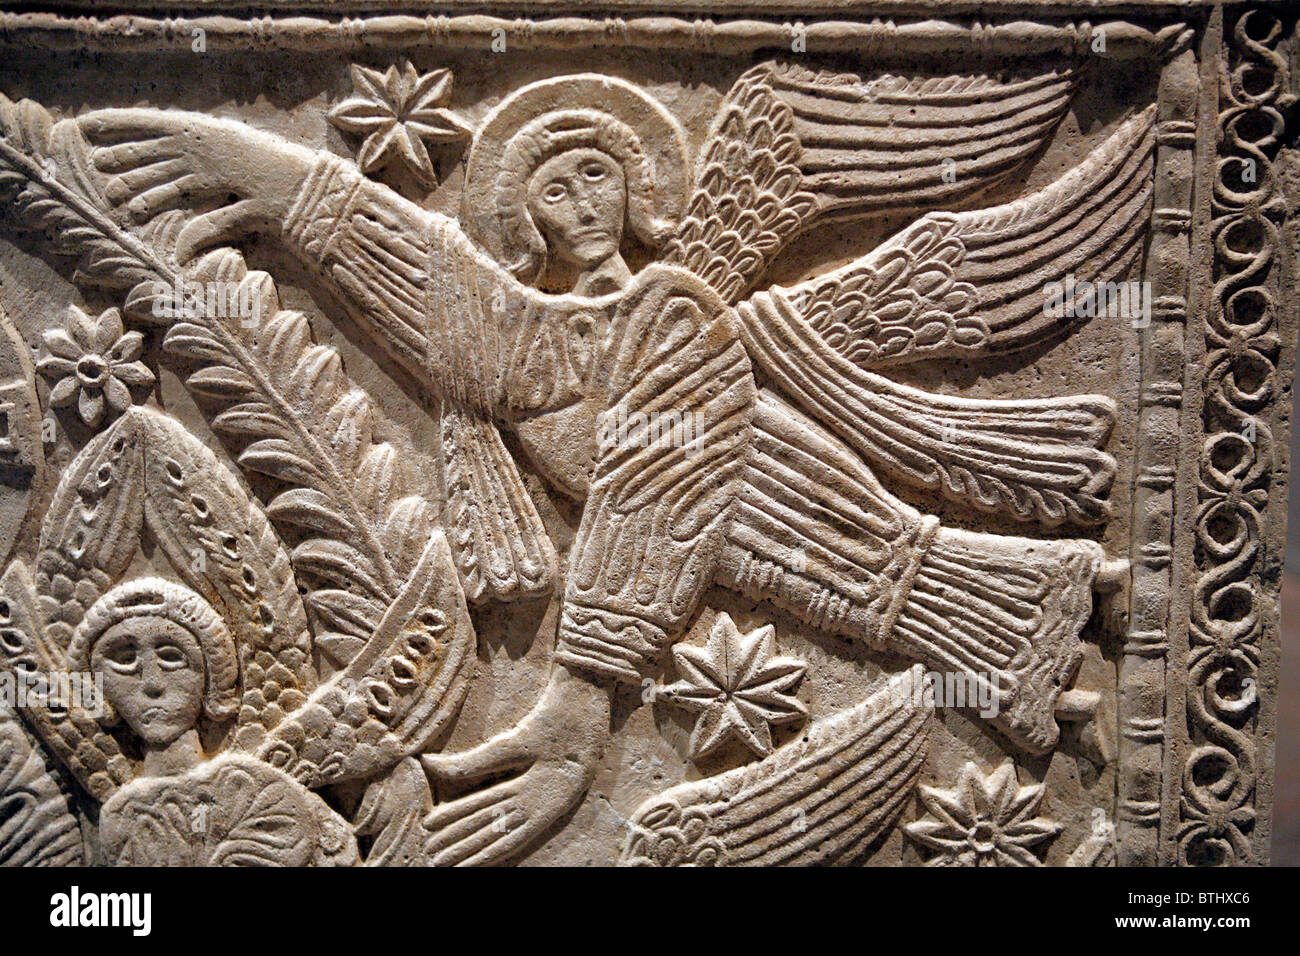 Tesoro de la catedral, Longobardos sarcófago de mármol (siglo VIII), Cividale del Friuli, Friuli-Venezia Giulia, Italia Foto de stock